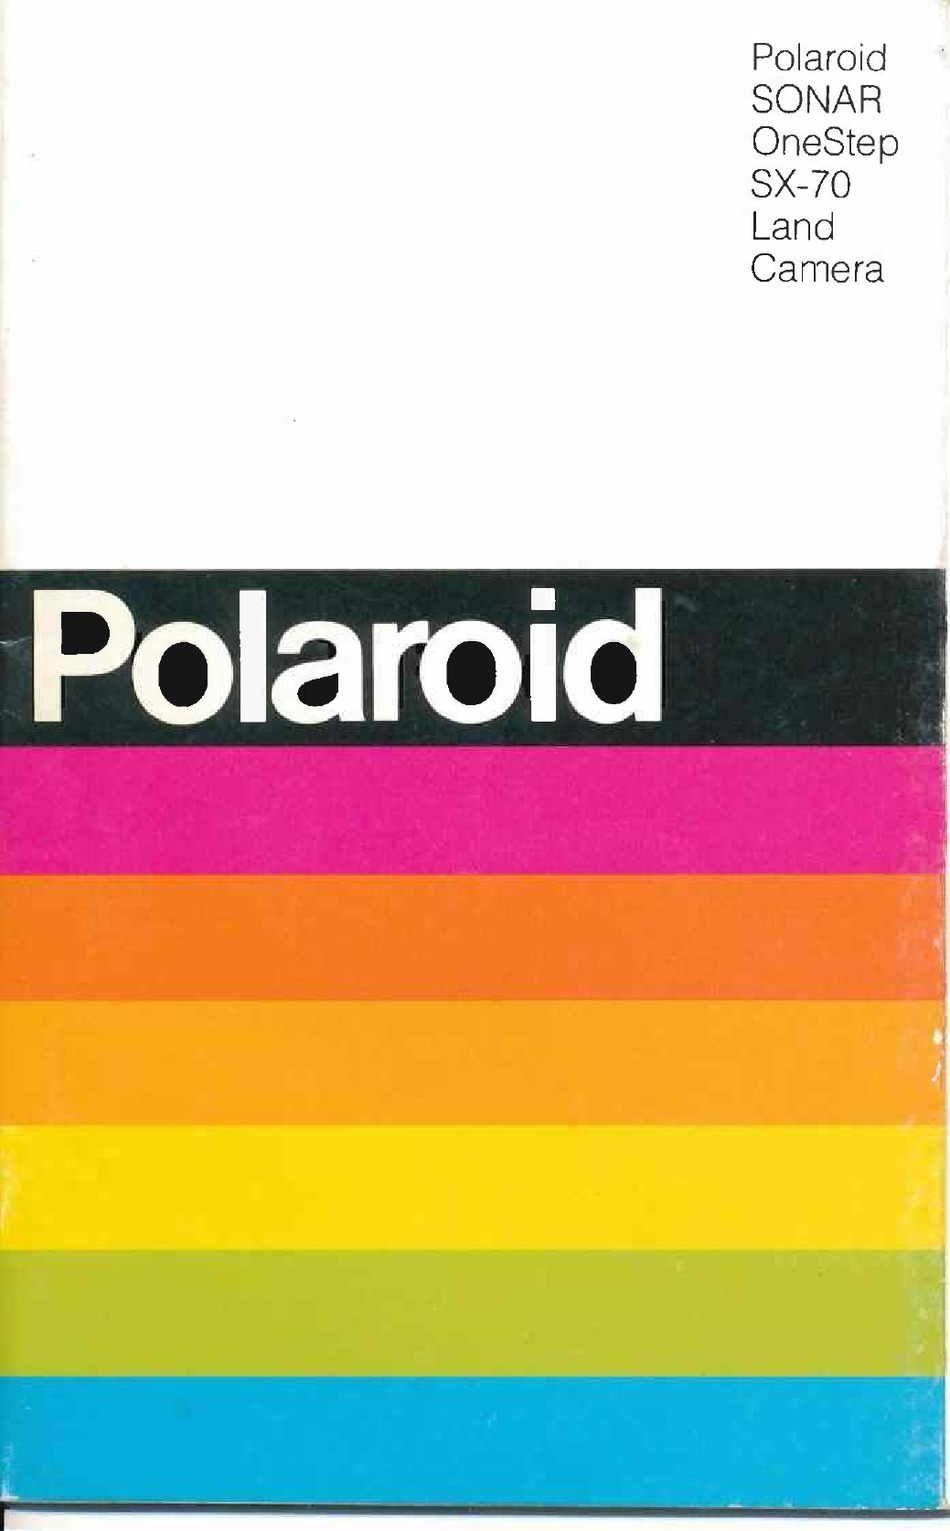 POLAROID SONAR ONESTEP SX-70 MANUAL Pdf Download | ManualsLib